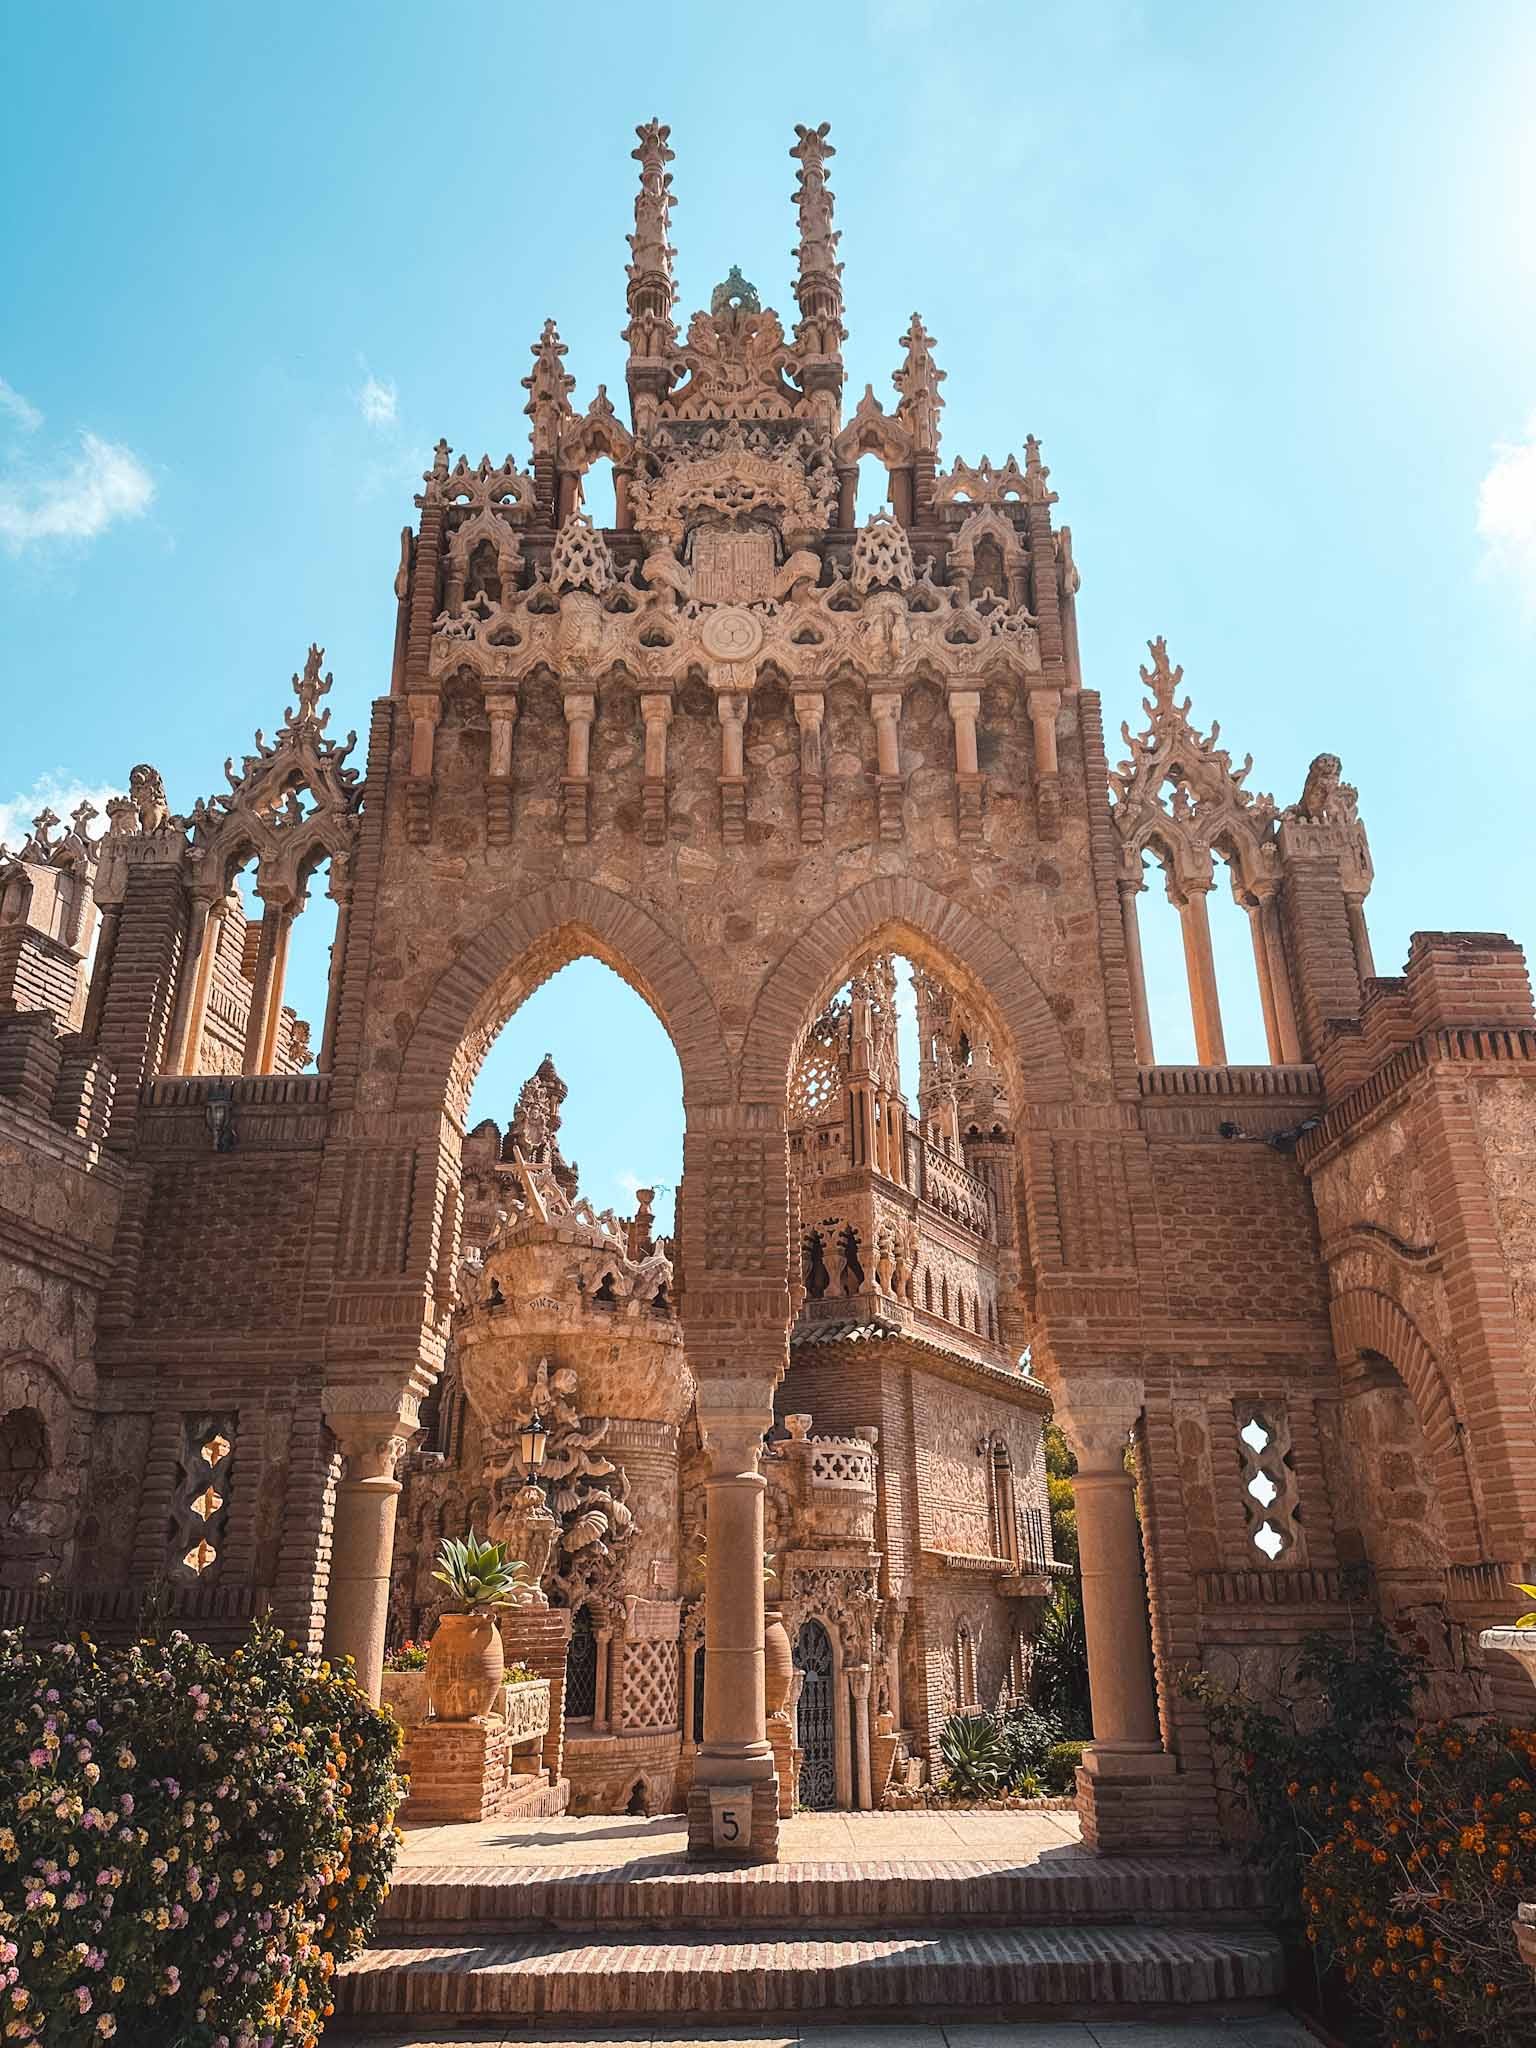 Castillo de Colomares - hidden gems in Andalusia, Spain